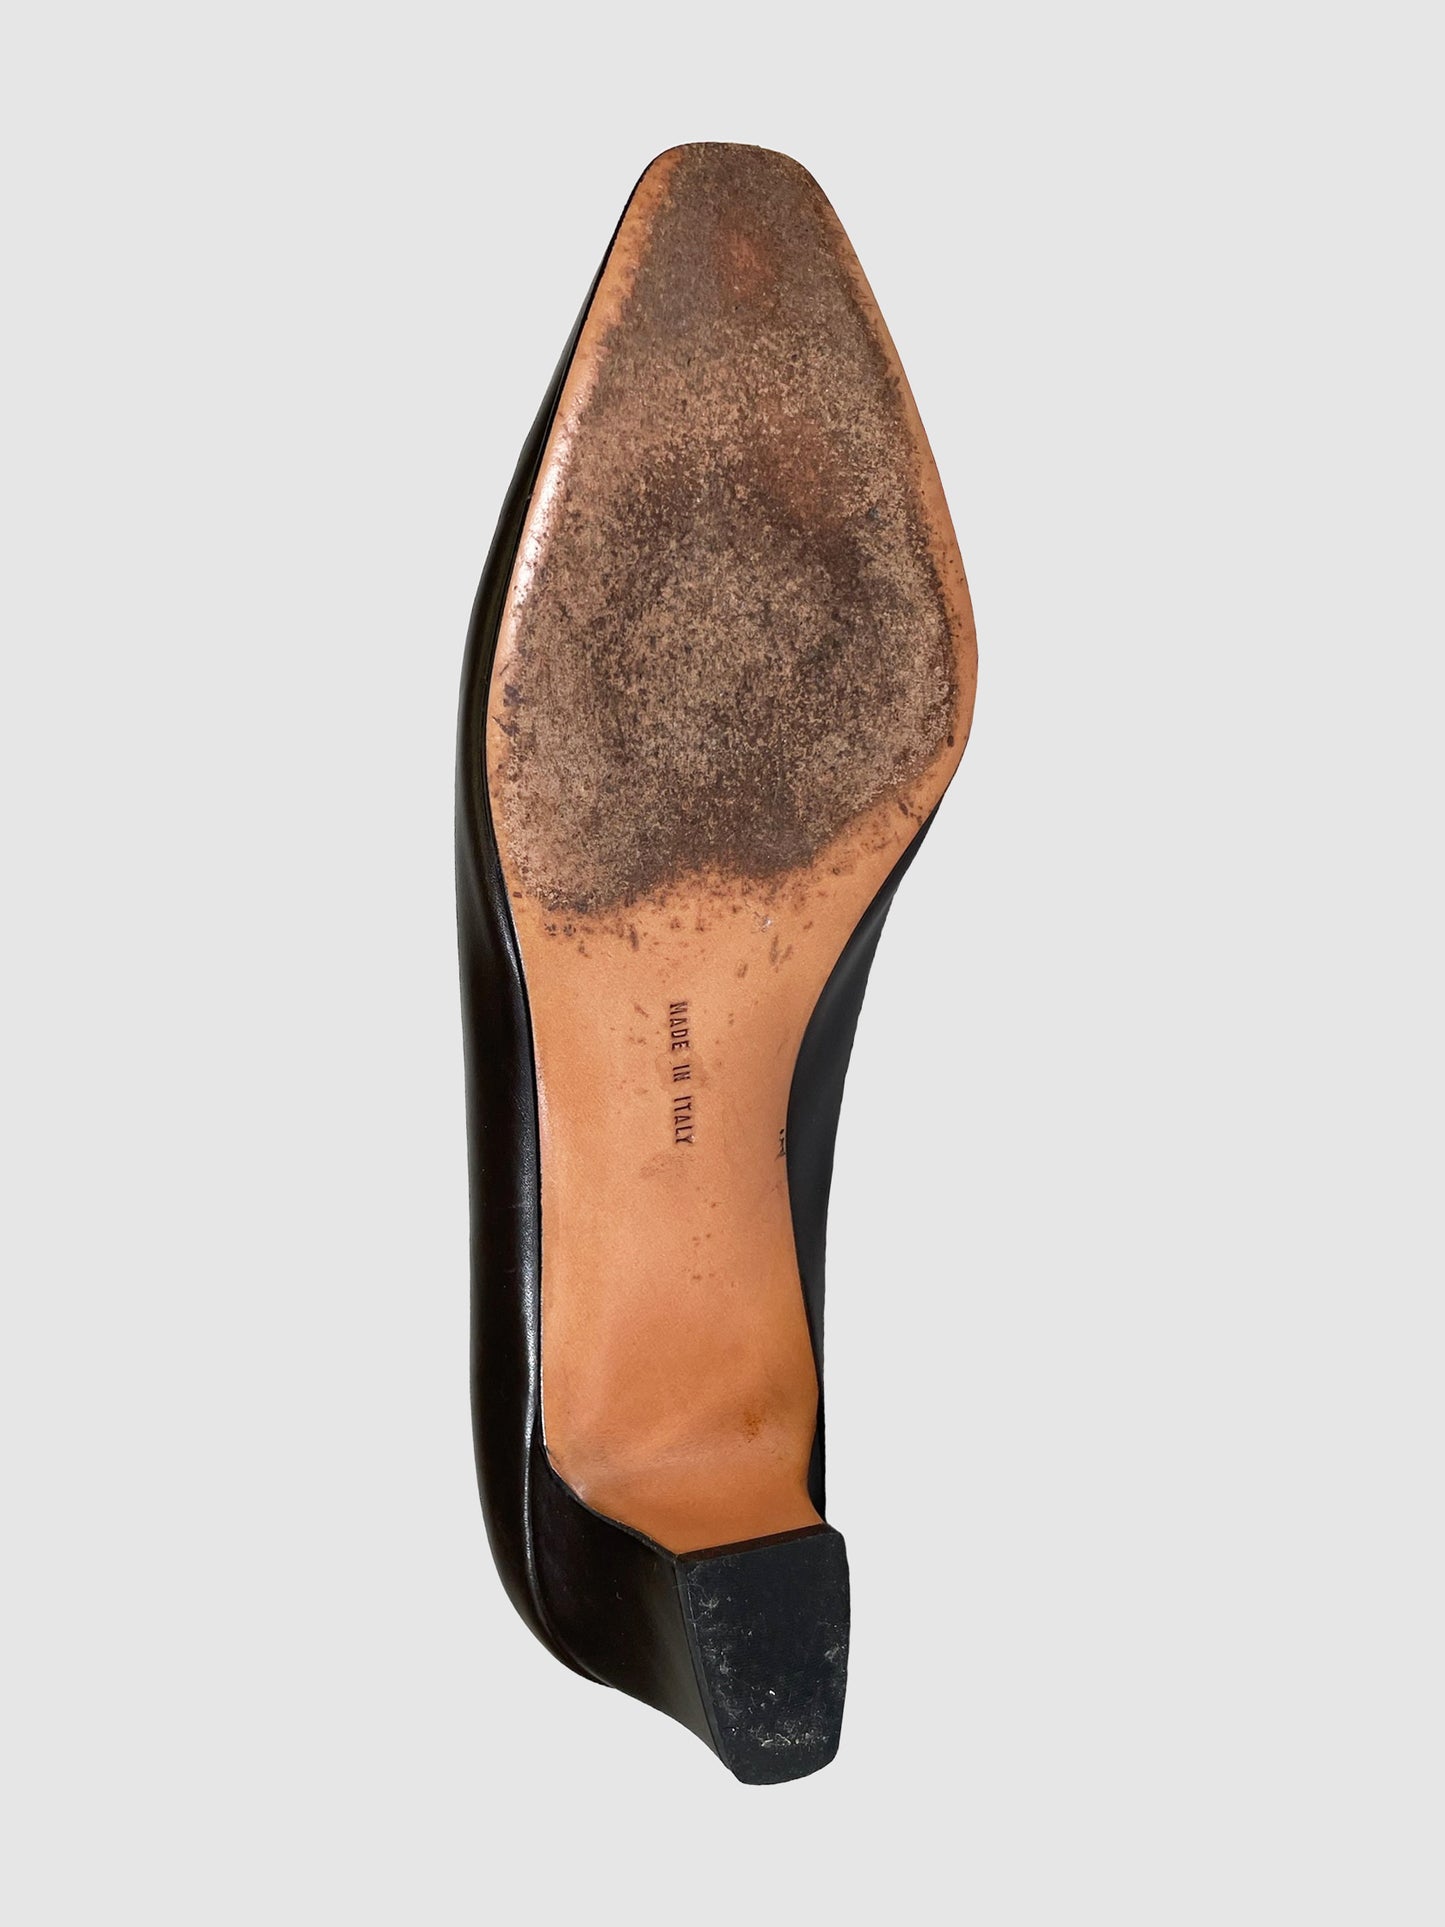 Salvatore Ferragamo Leather Pumps with Horseshoe Accent - Size 7.5